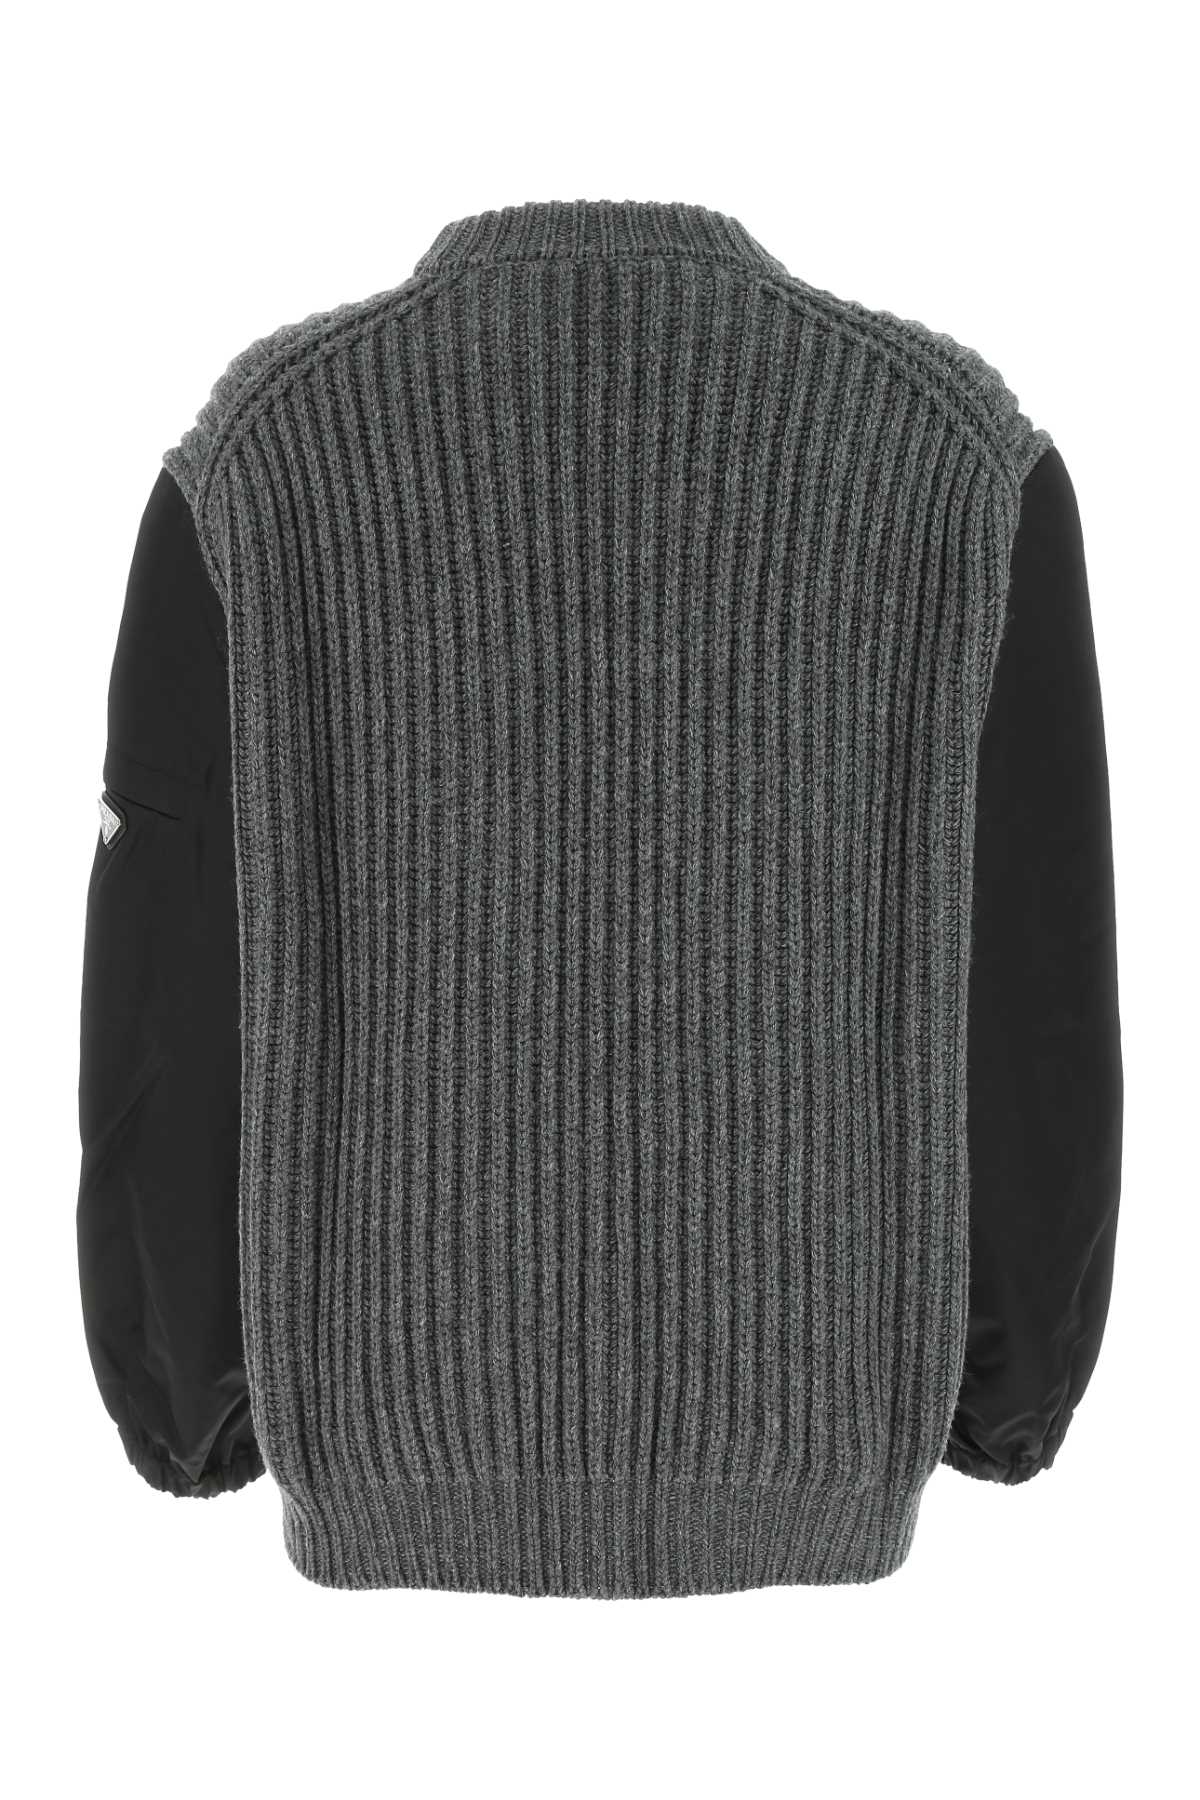 Prada Dark Grey Wool Blend Oversize Sweater In Ardesia